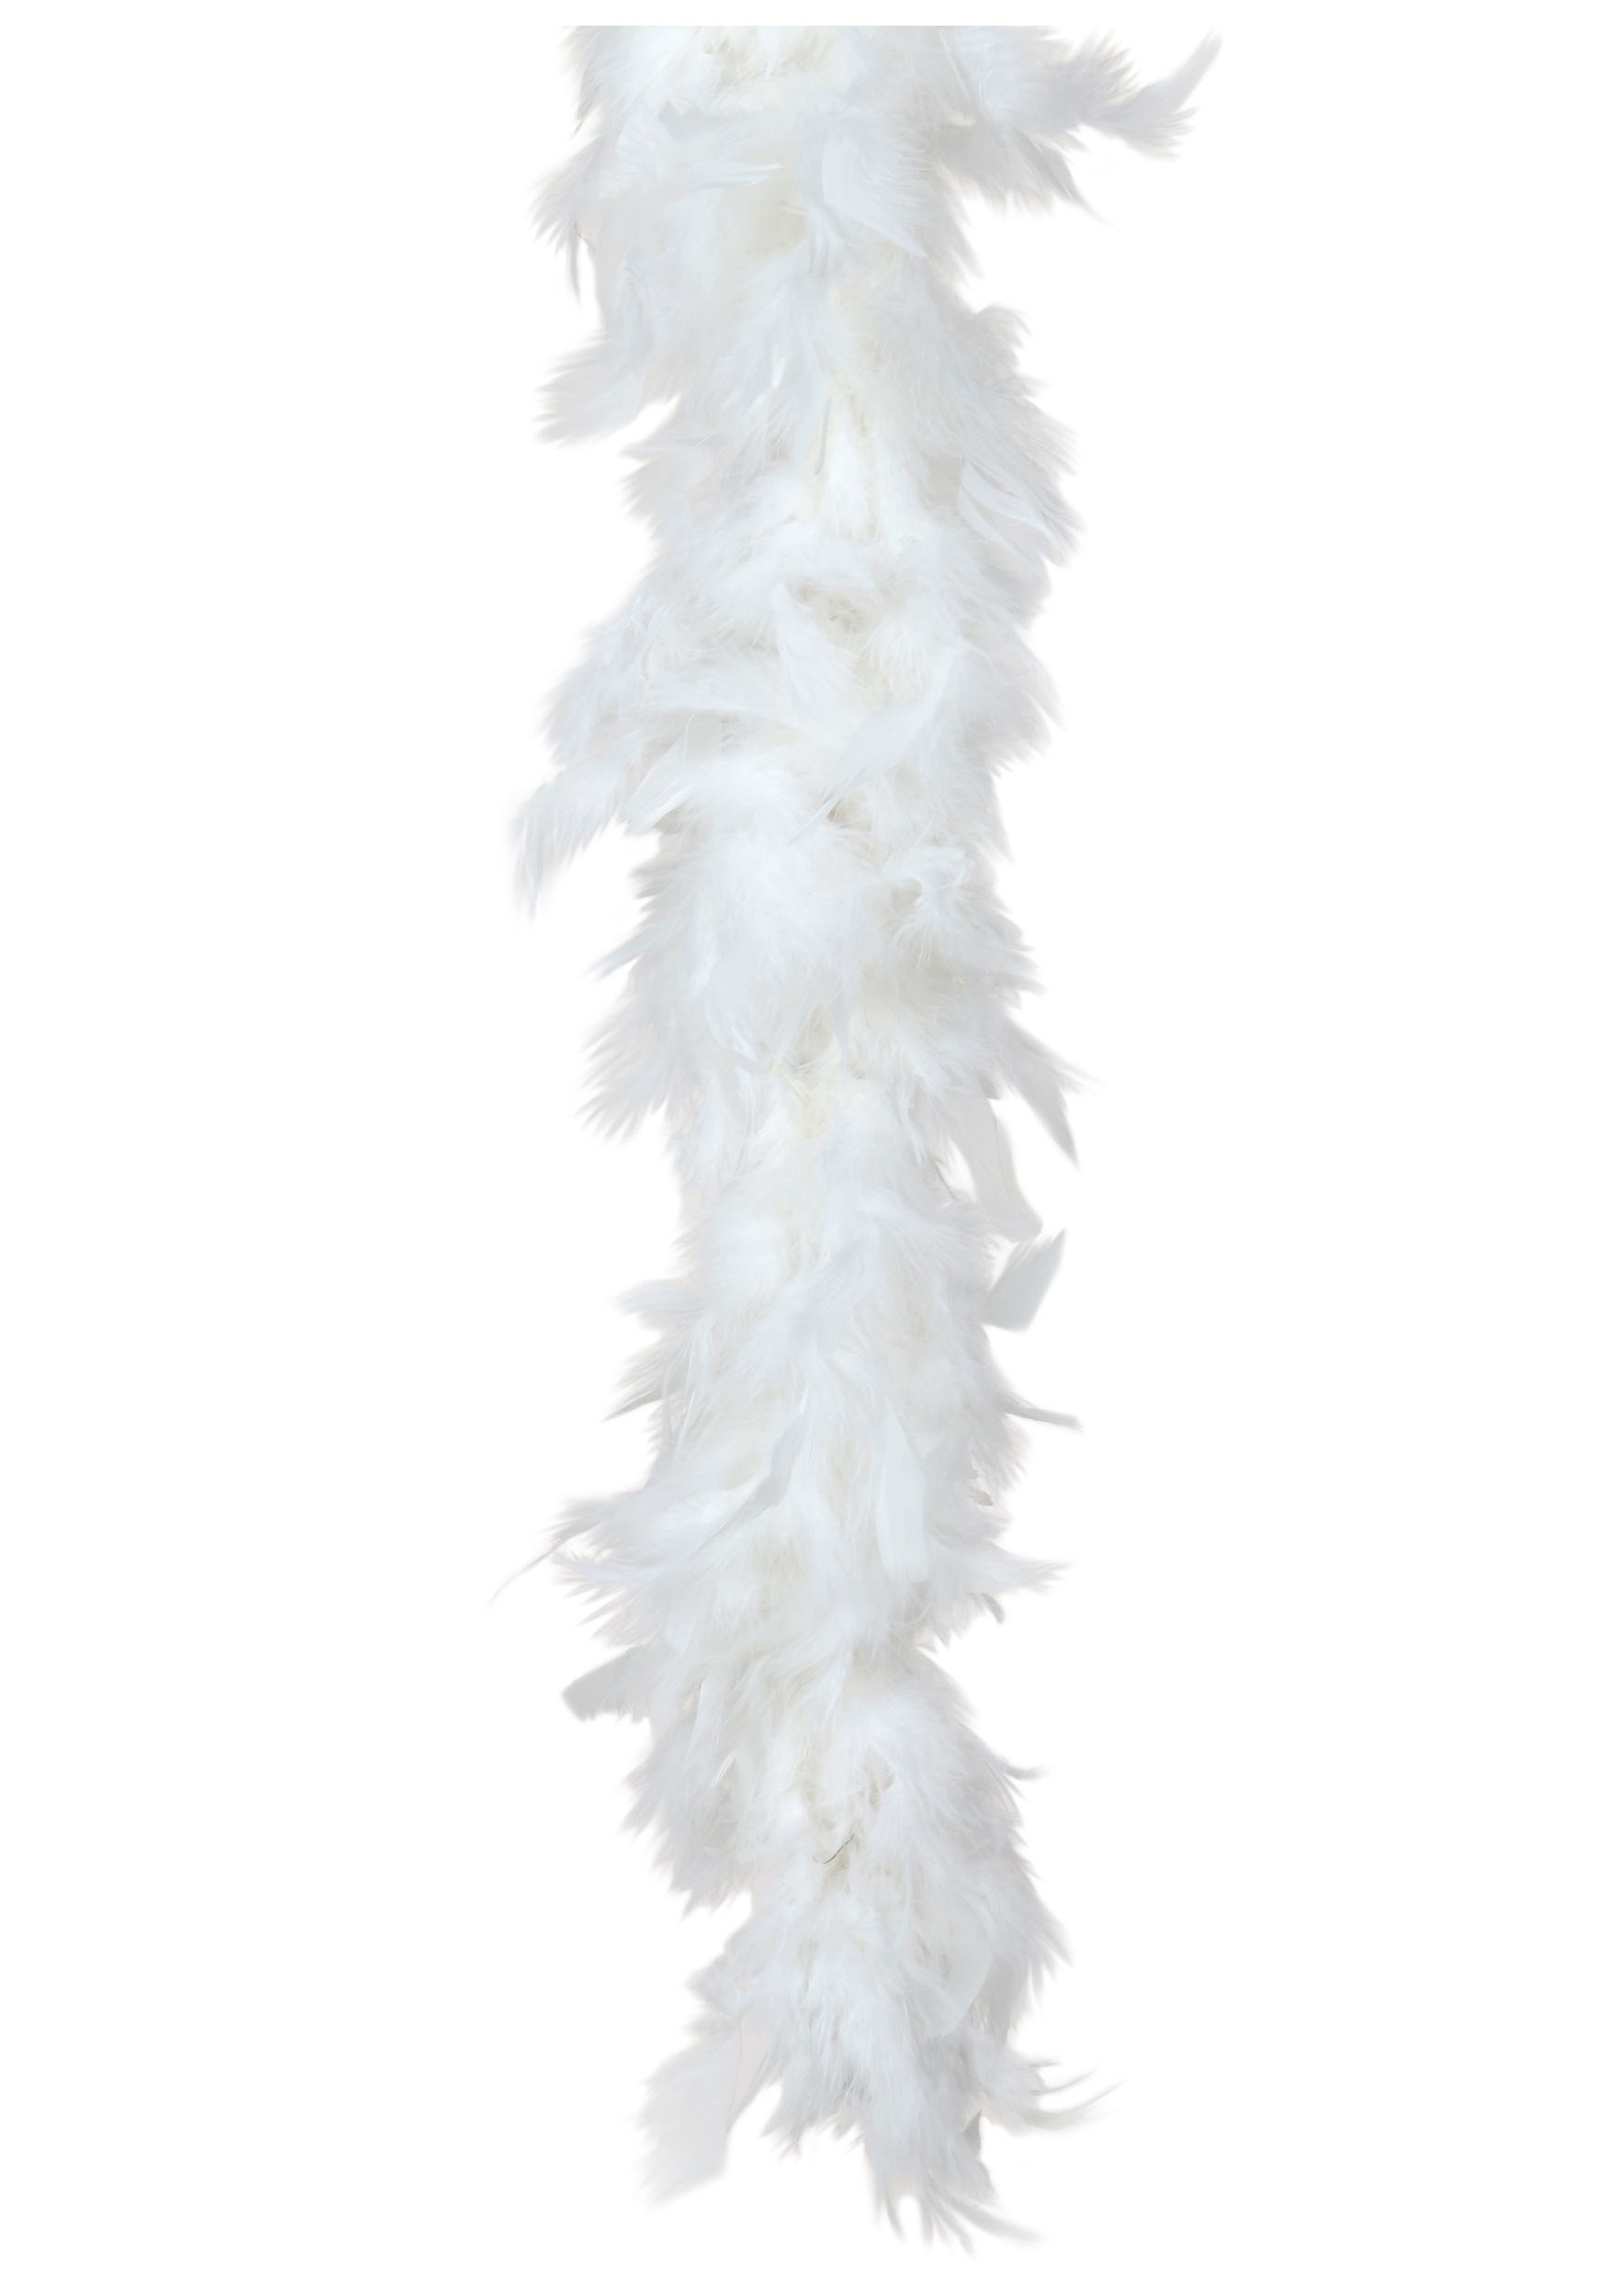 Feather Boa Costume Accessory - 1920's White Boa with Feathers - 1